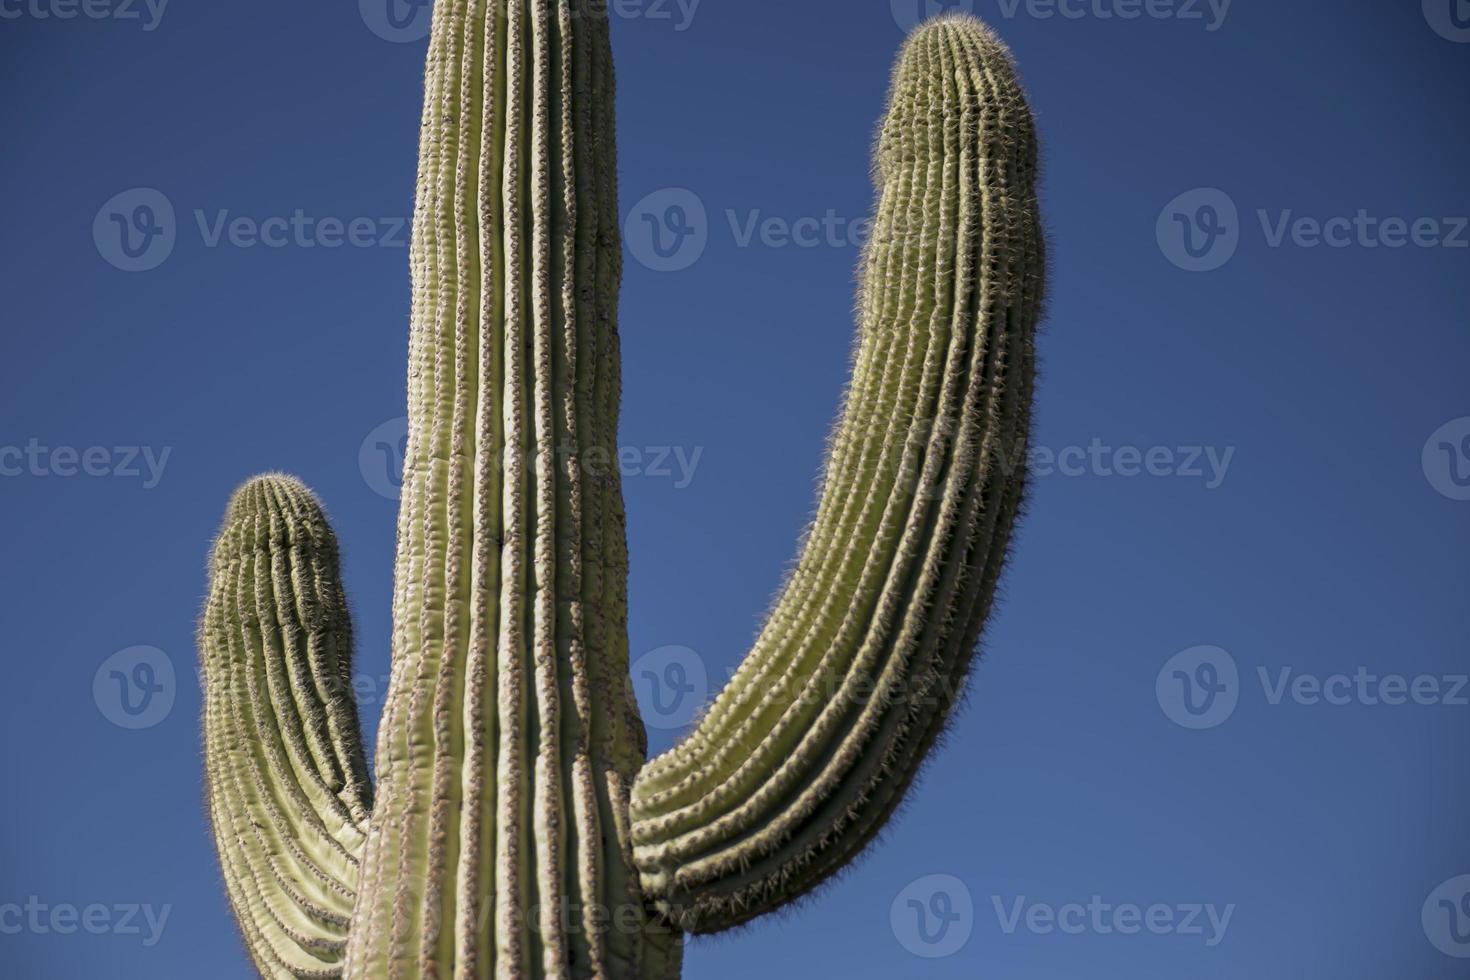 Saguaro Cactus Arms Against Blue Sky photo